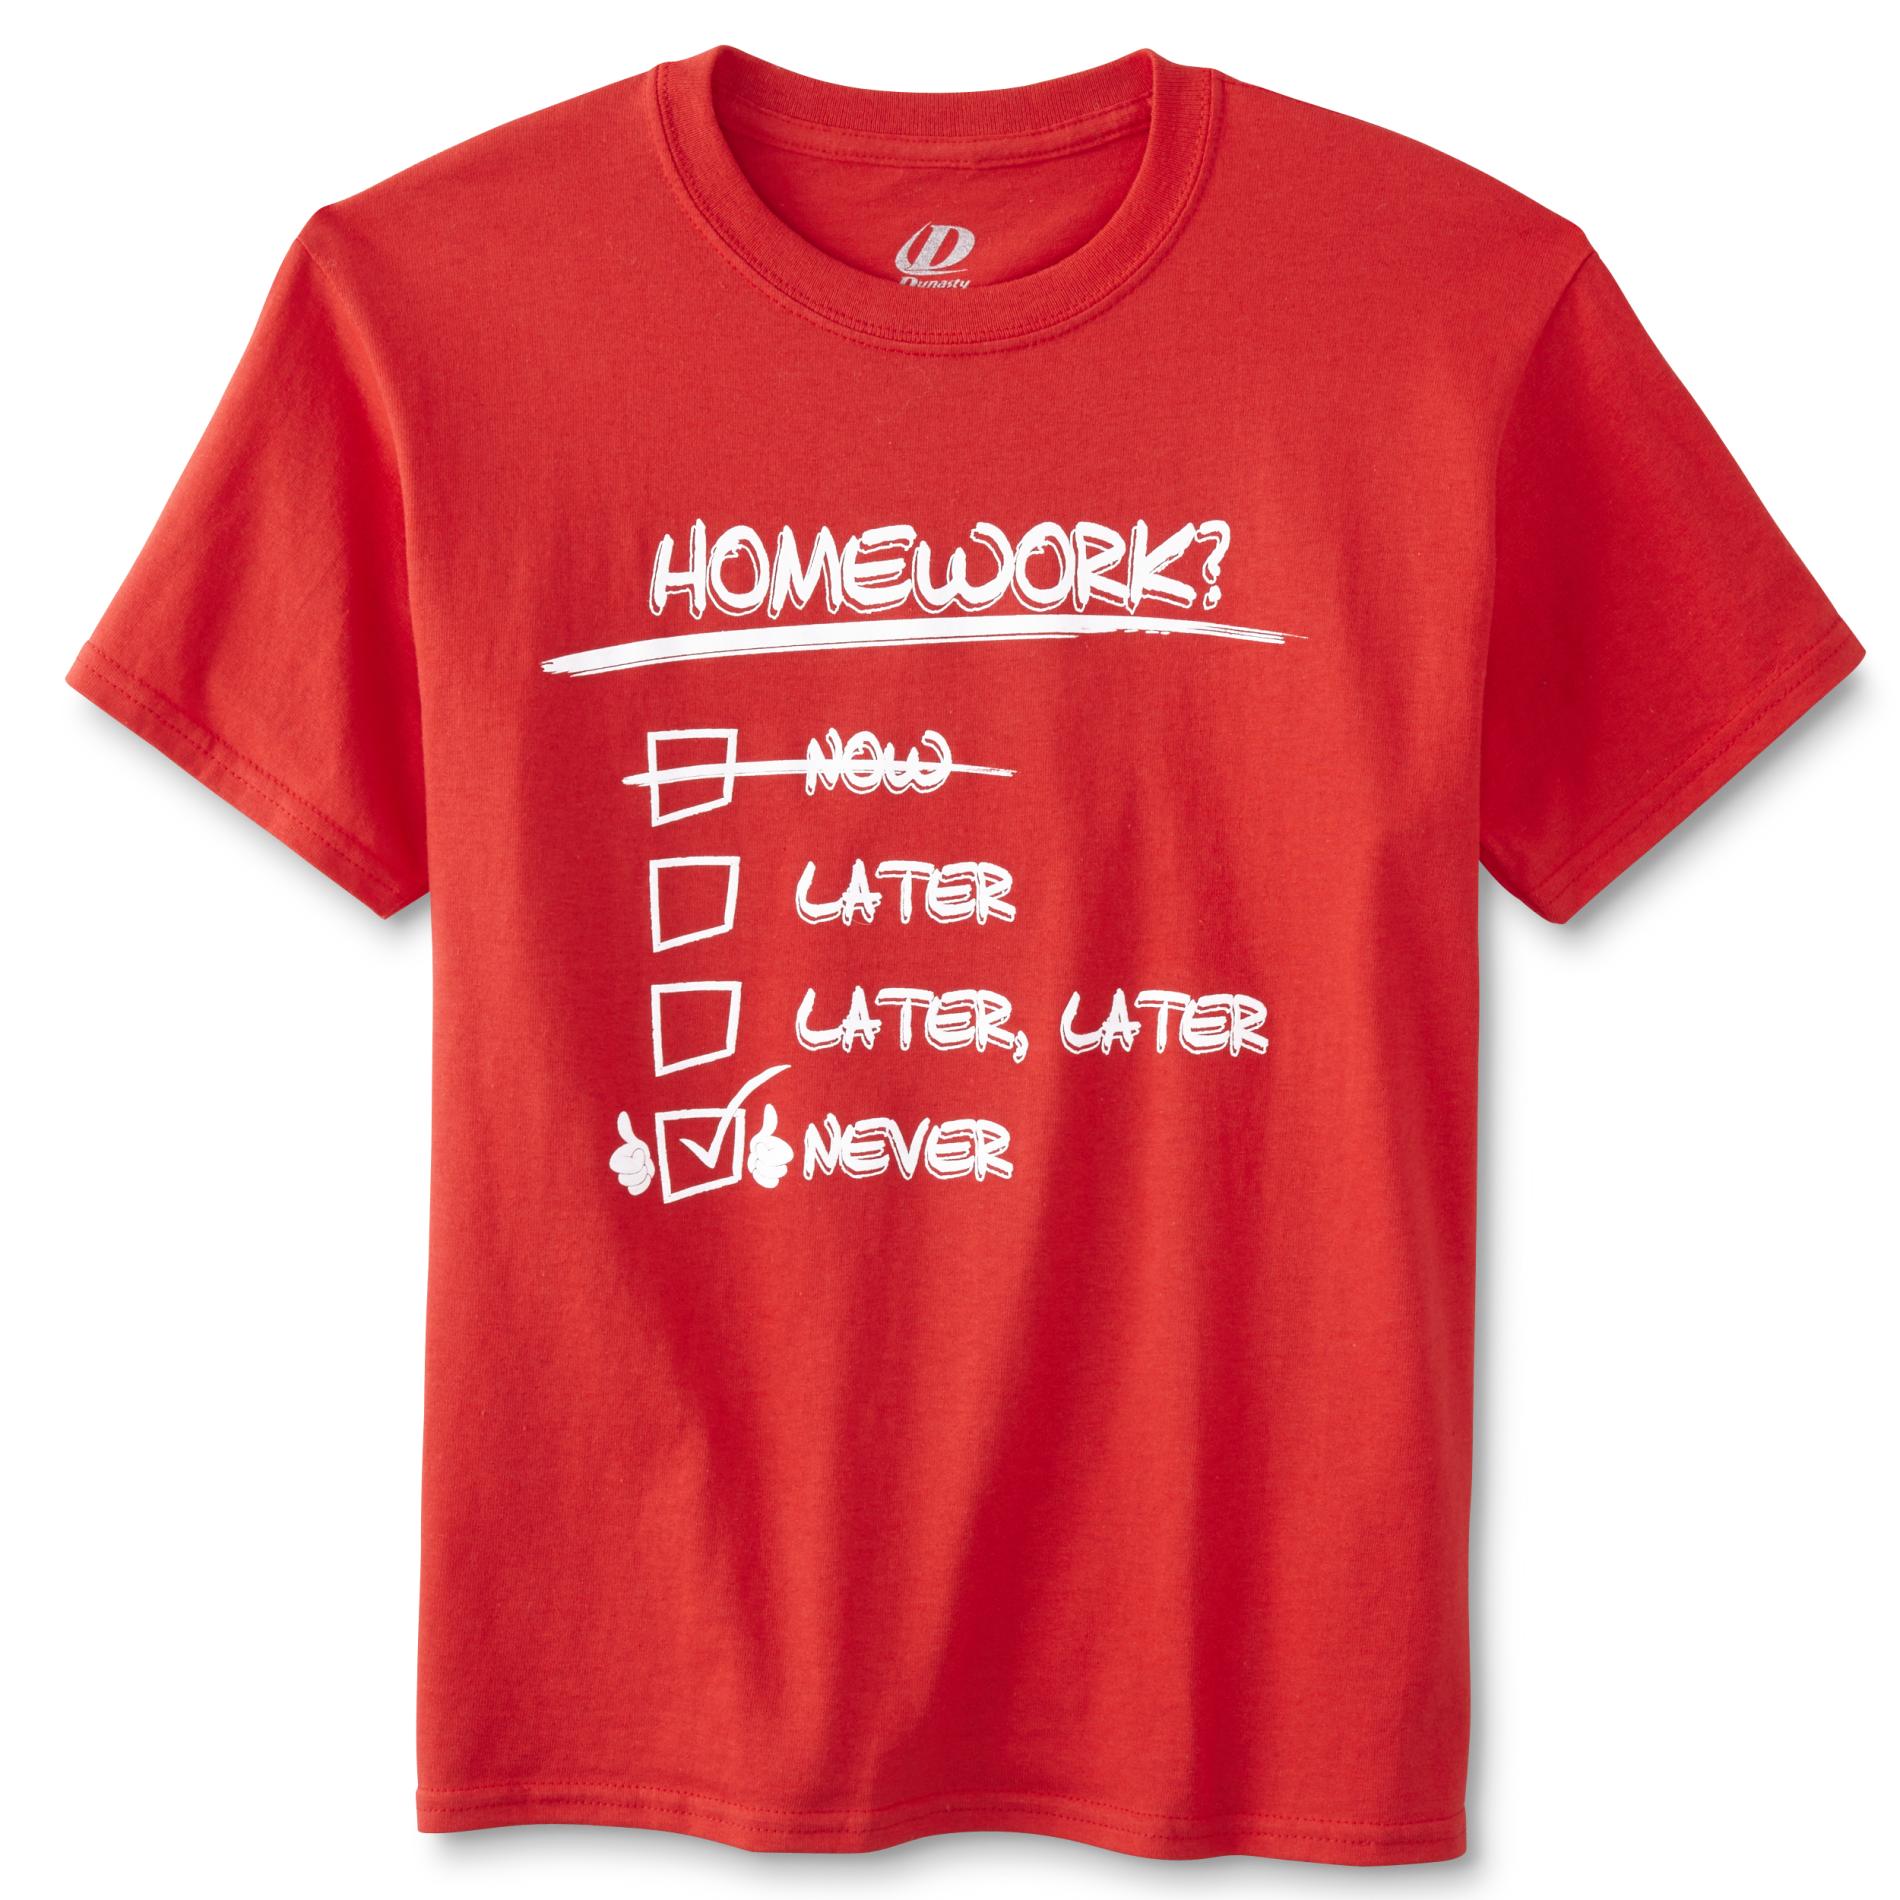 Boys' Graphic T-Shirt - Homework